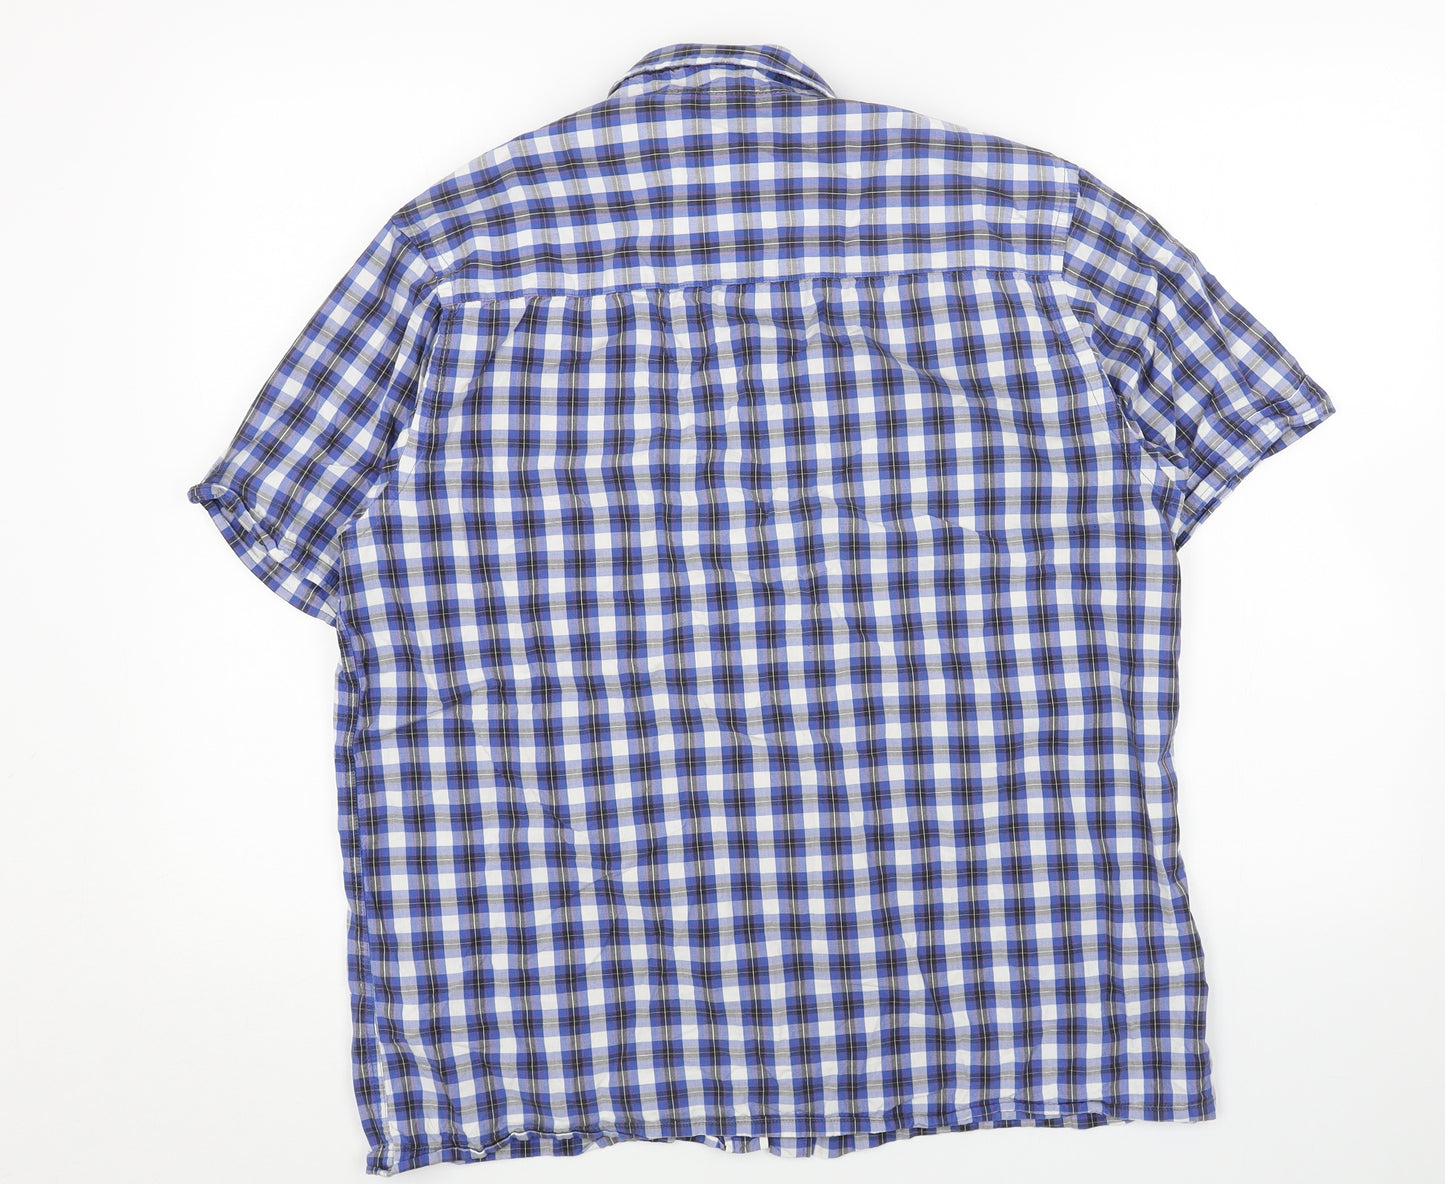 George Mens Blue Plaid Cotton Button-Up Size L Collared Button